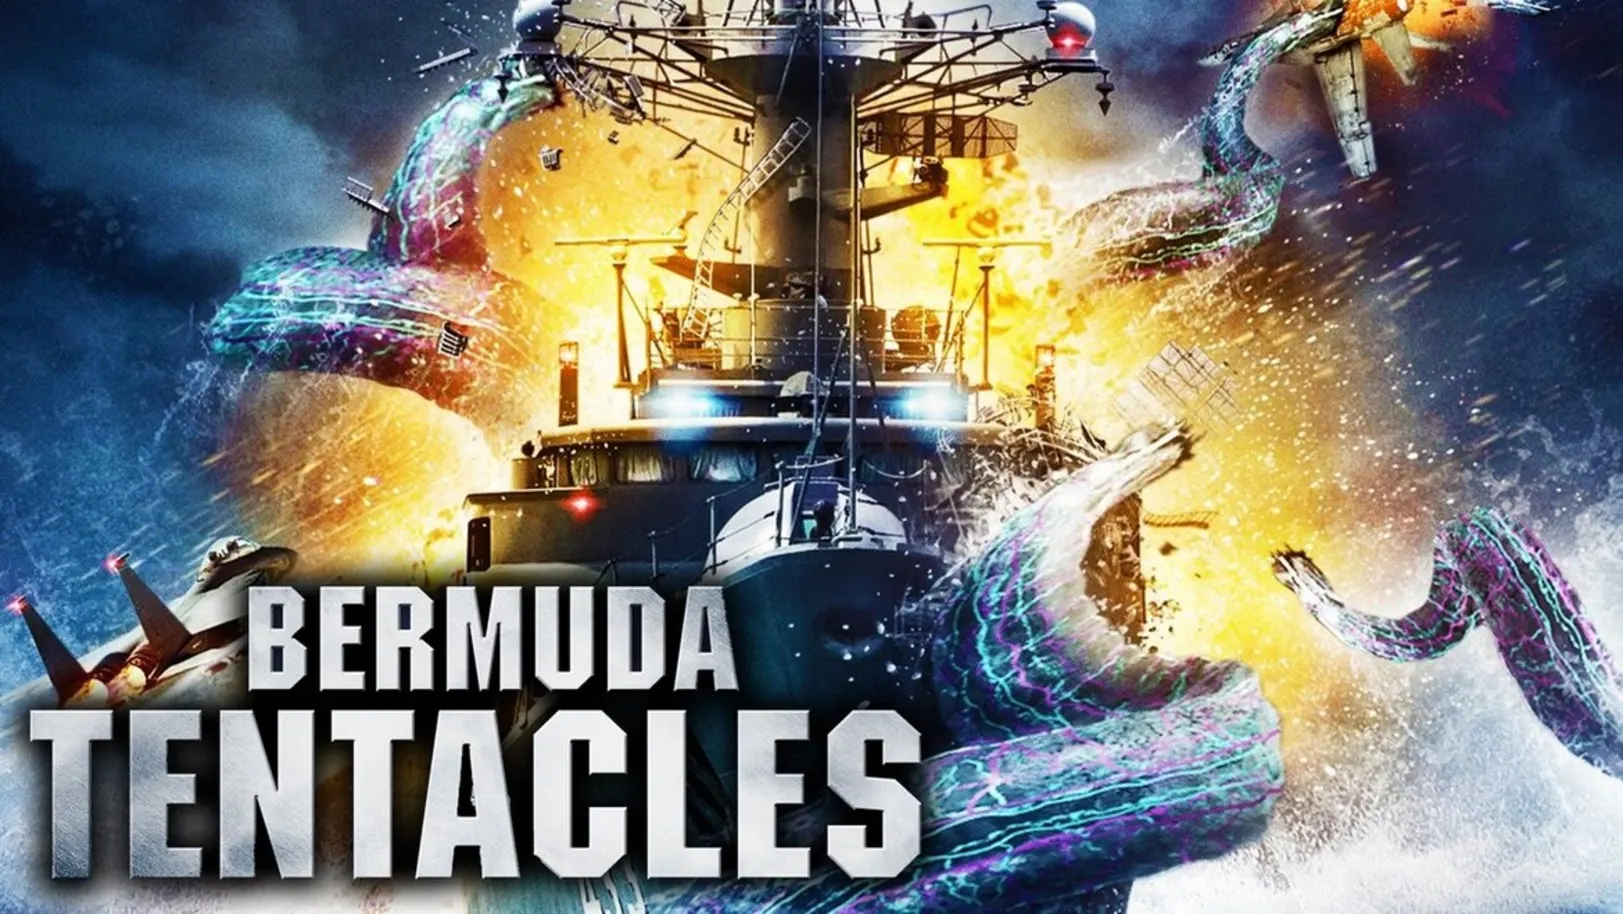 Bermuda Tentacles Streaming Now On &Prive HD